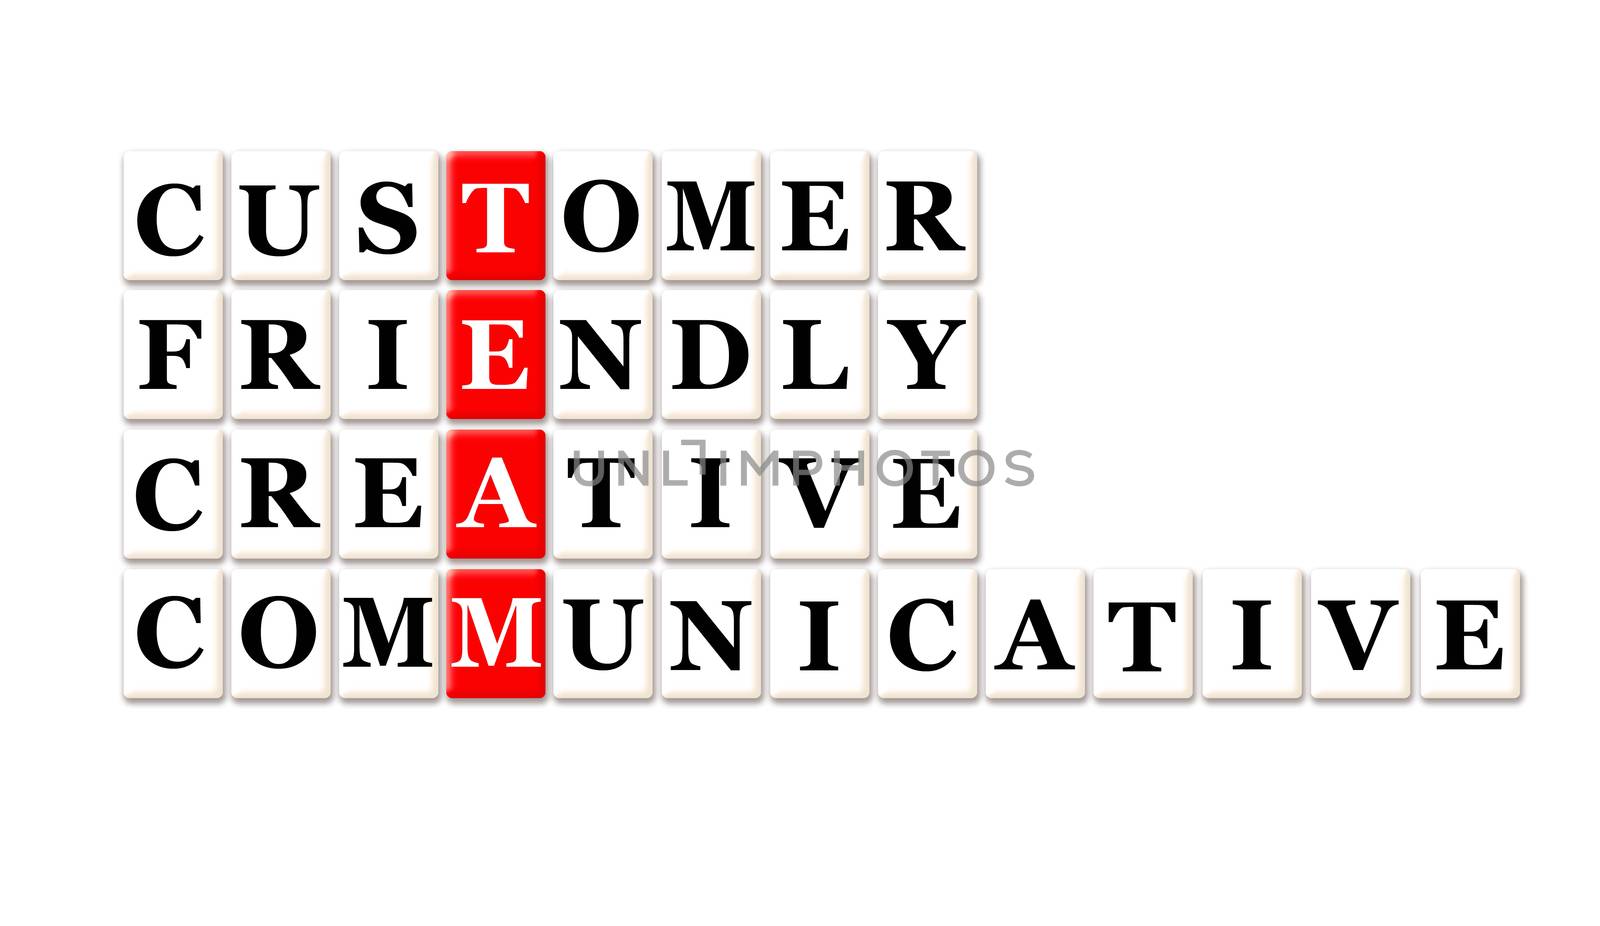 Acronym of Team - customer friendly ,creative,communicative